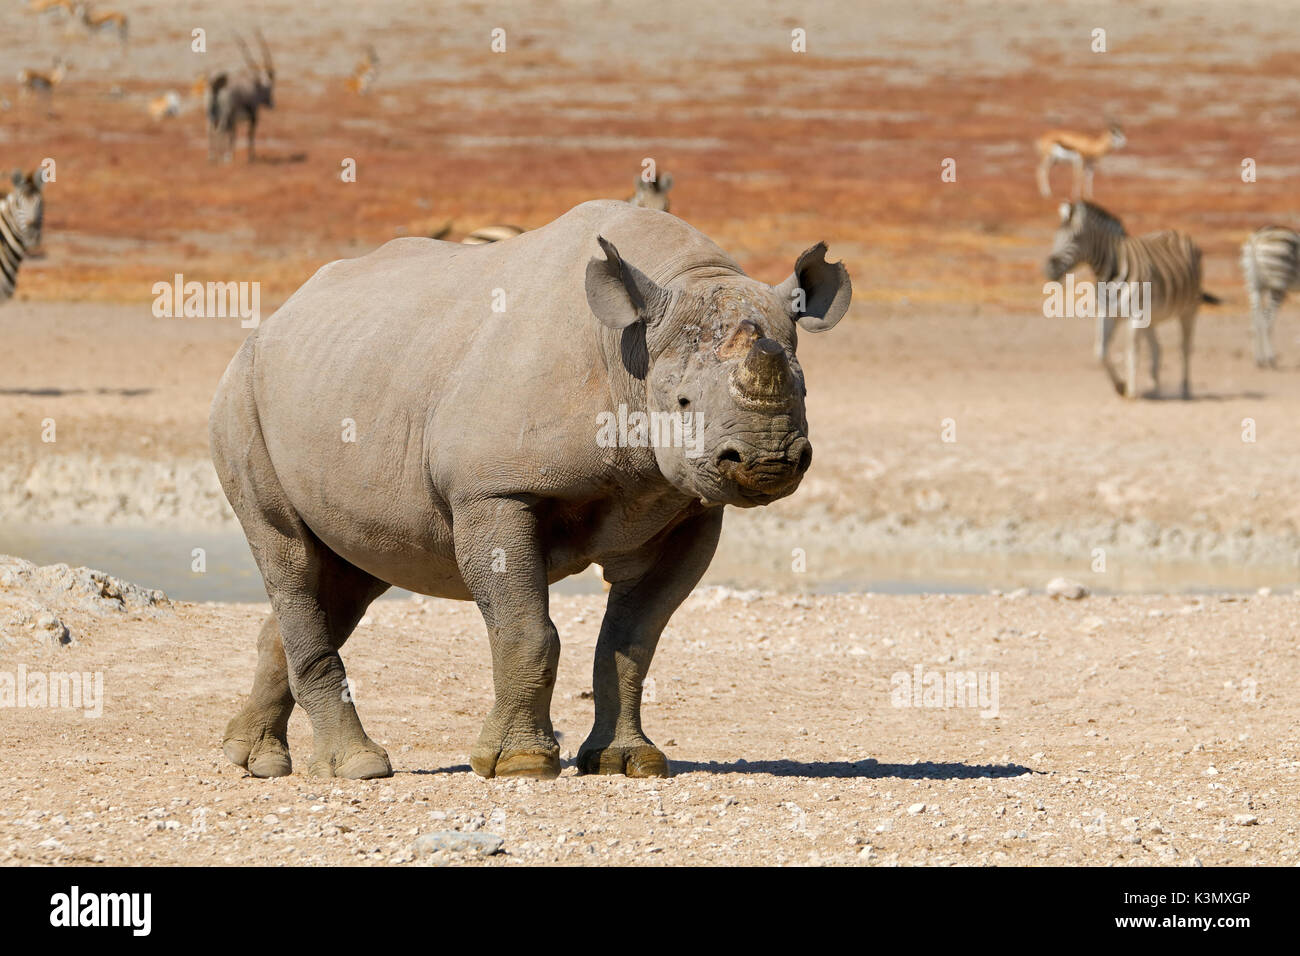 A black rhinoceros (Diceros bicornis) in natural habitat, Etosha National Park, Namibia Stock Photo